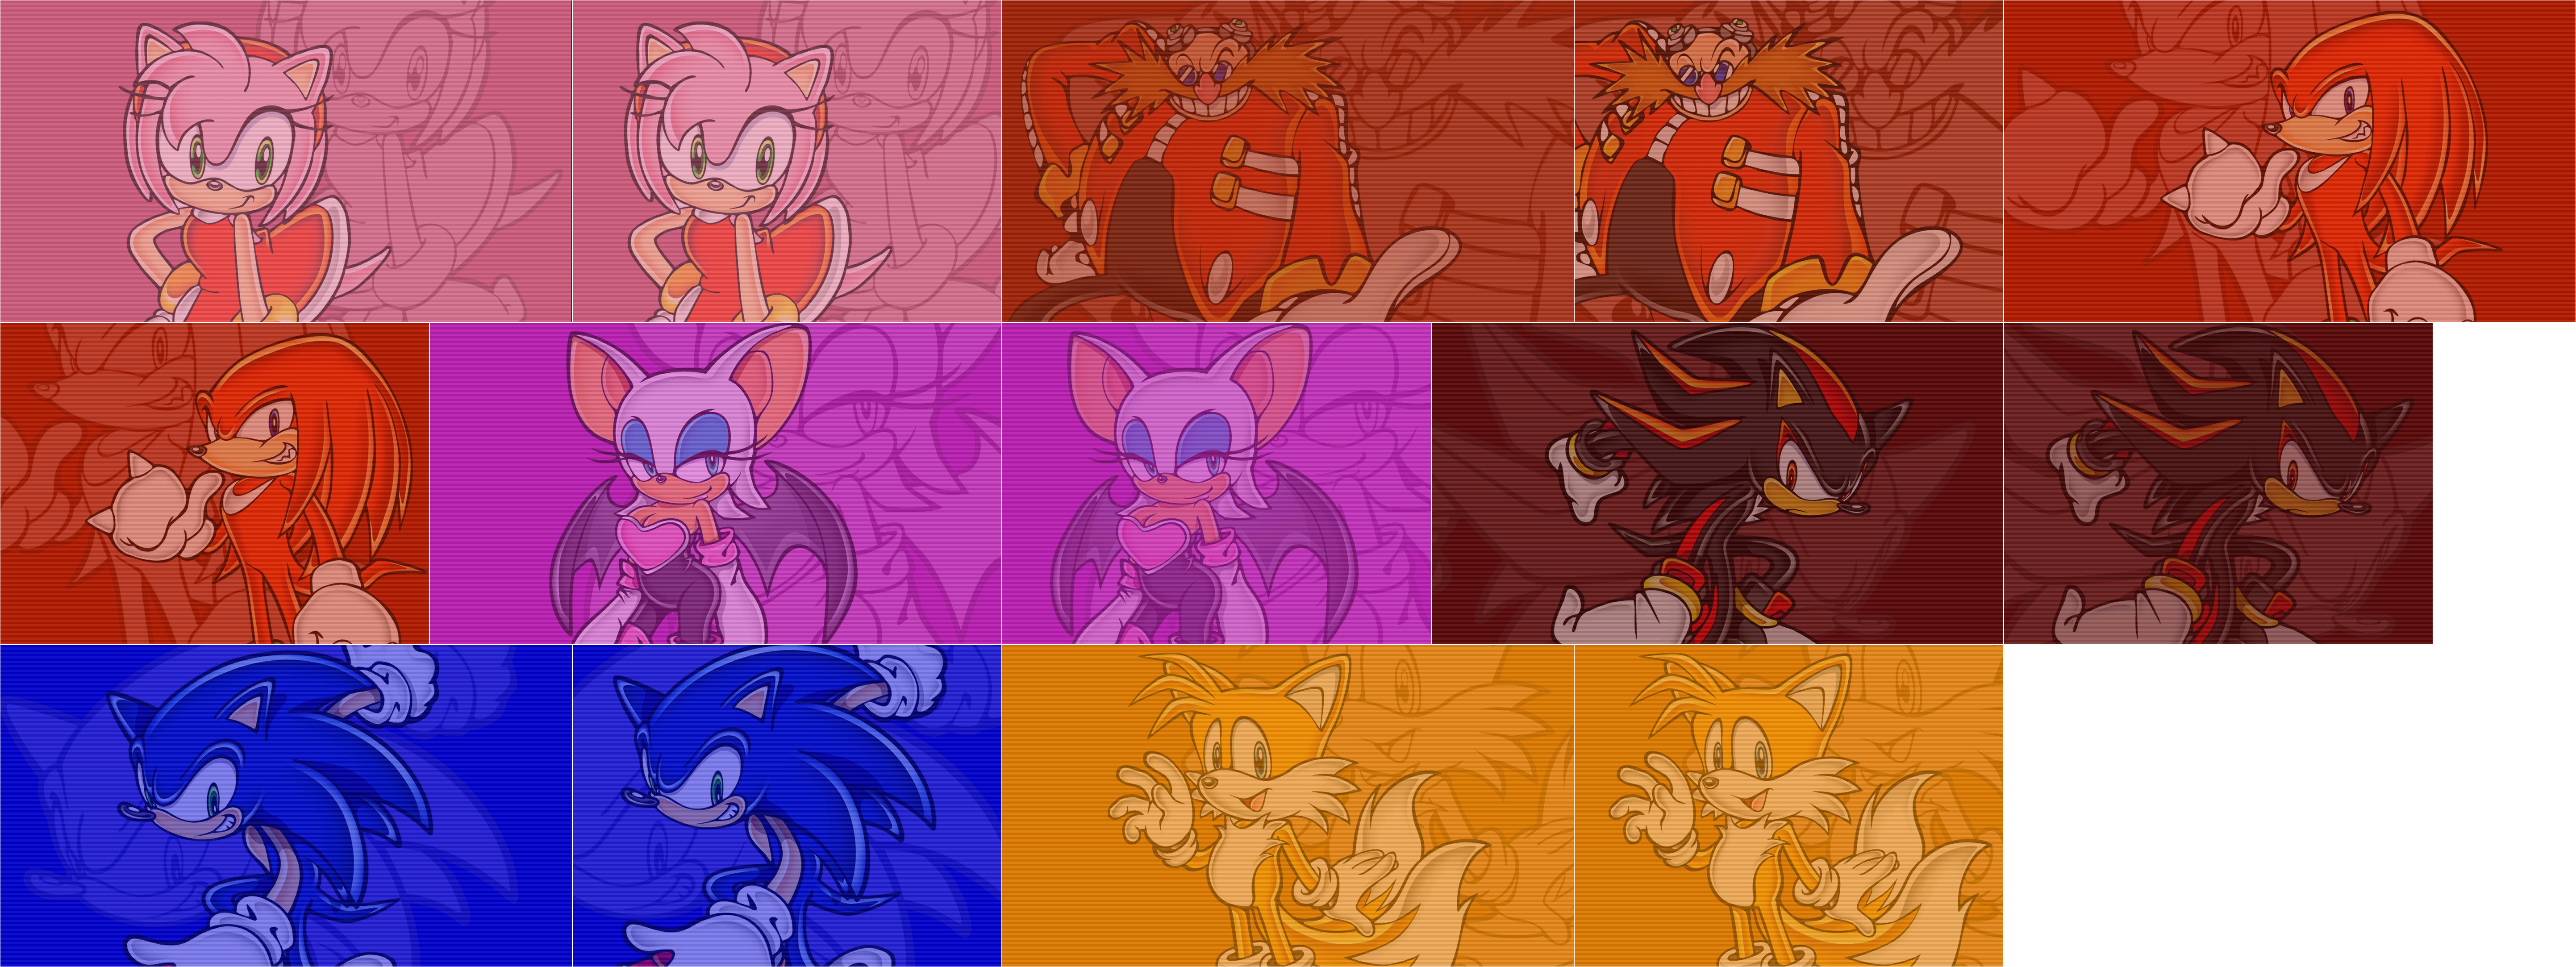 Sonic Adventure 2 Battle Wallpapers